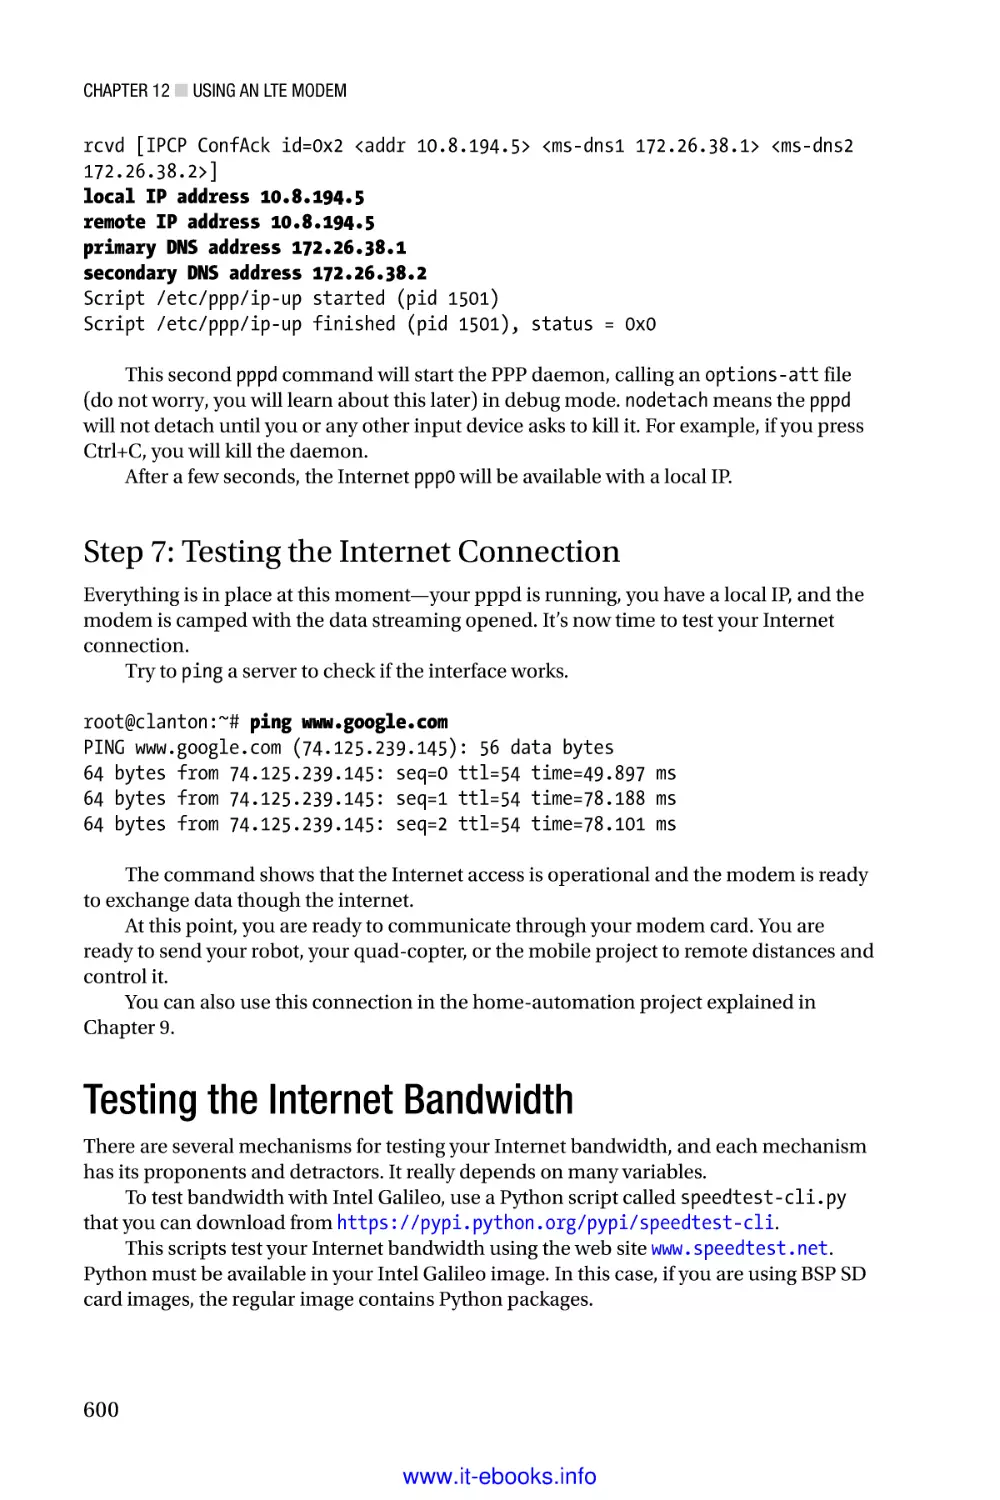 Step 7
Testing the Internet Bandwidth